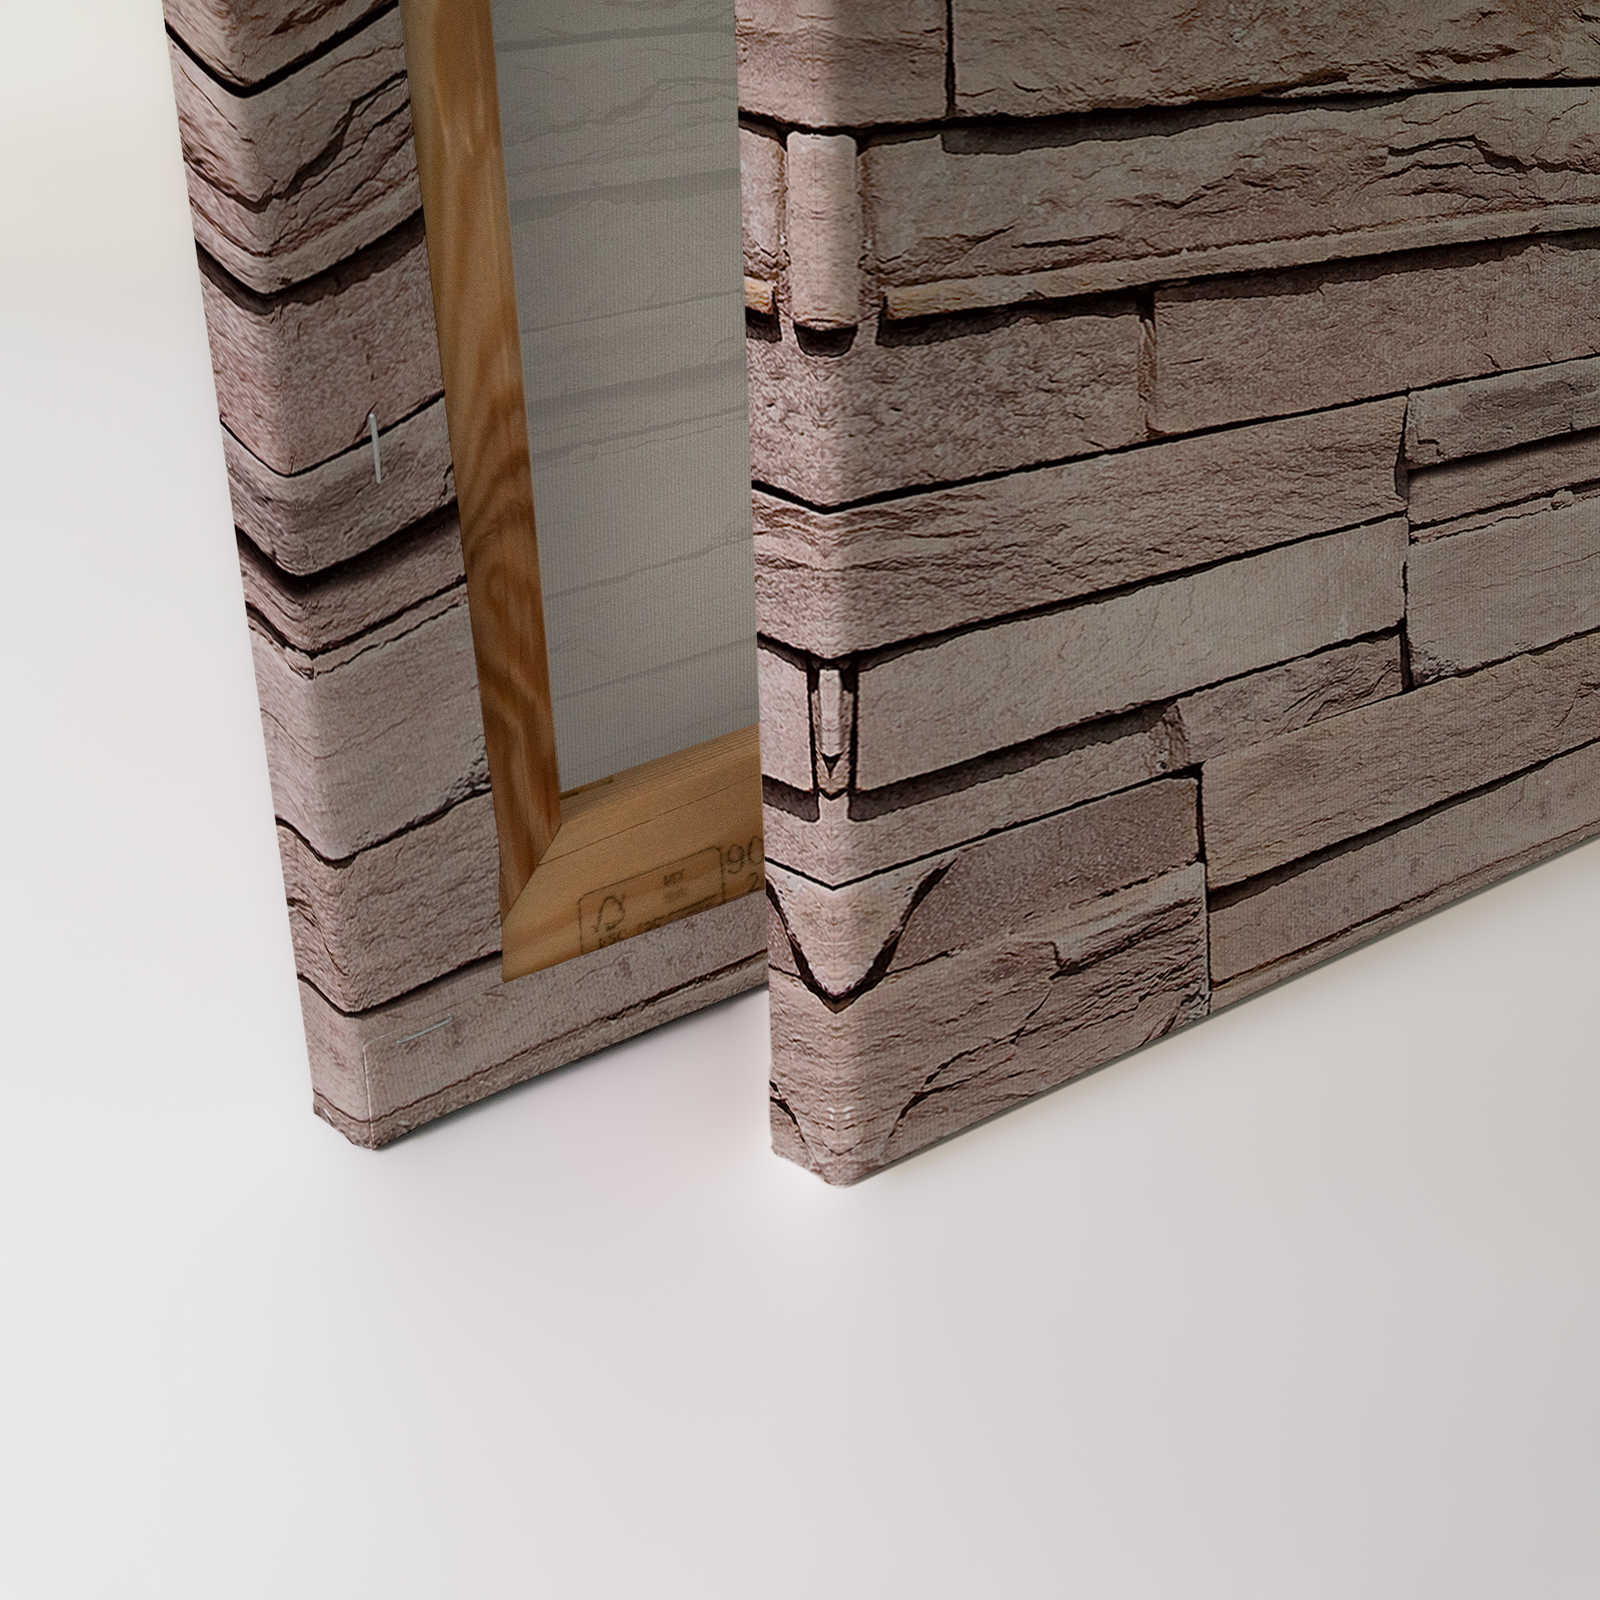             Leinwandbild 3D Steinoptik, hellbraune Trockenmauer – 1,20 m x 0,80 m
        